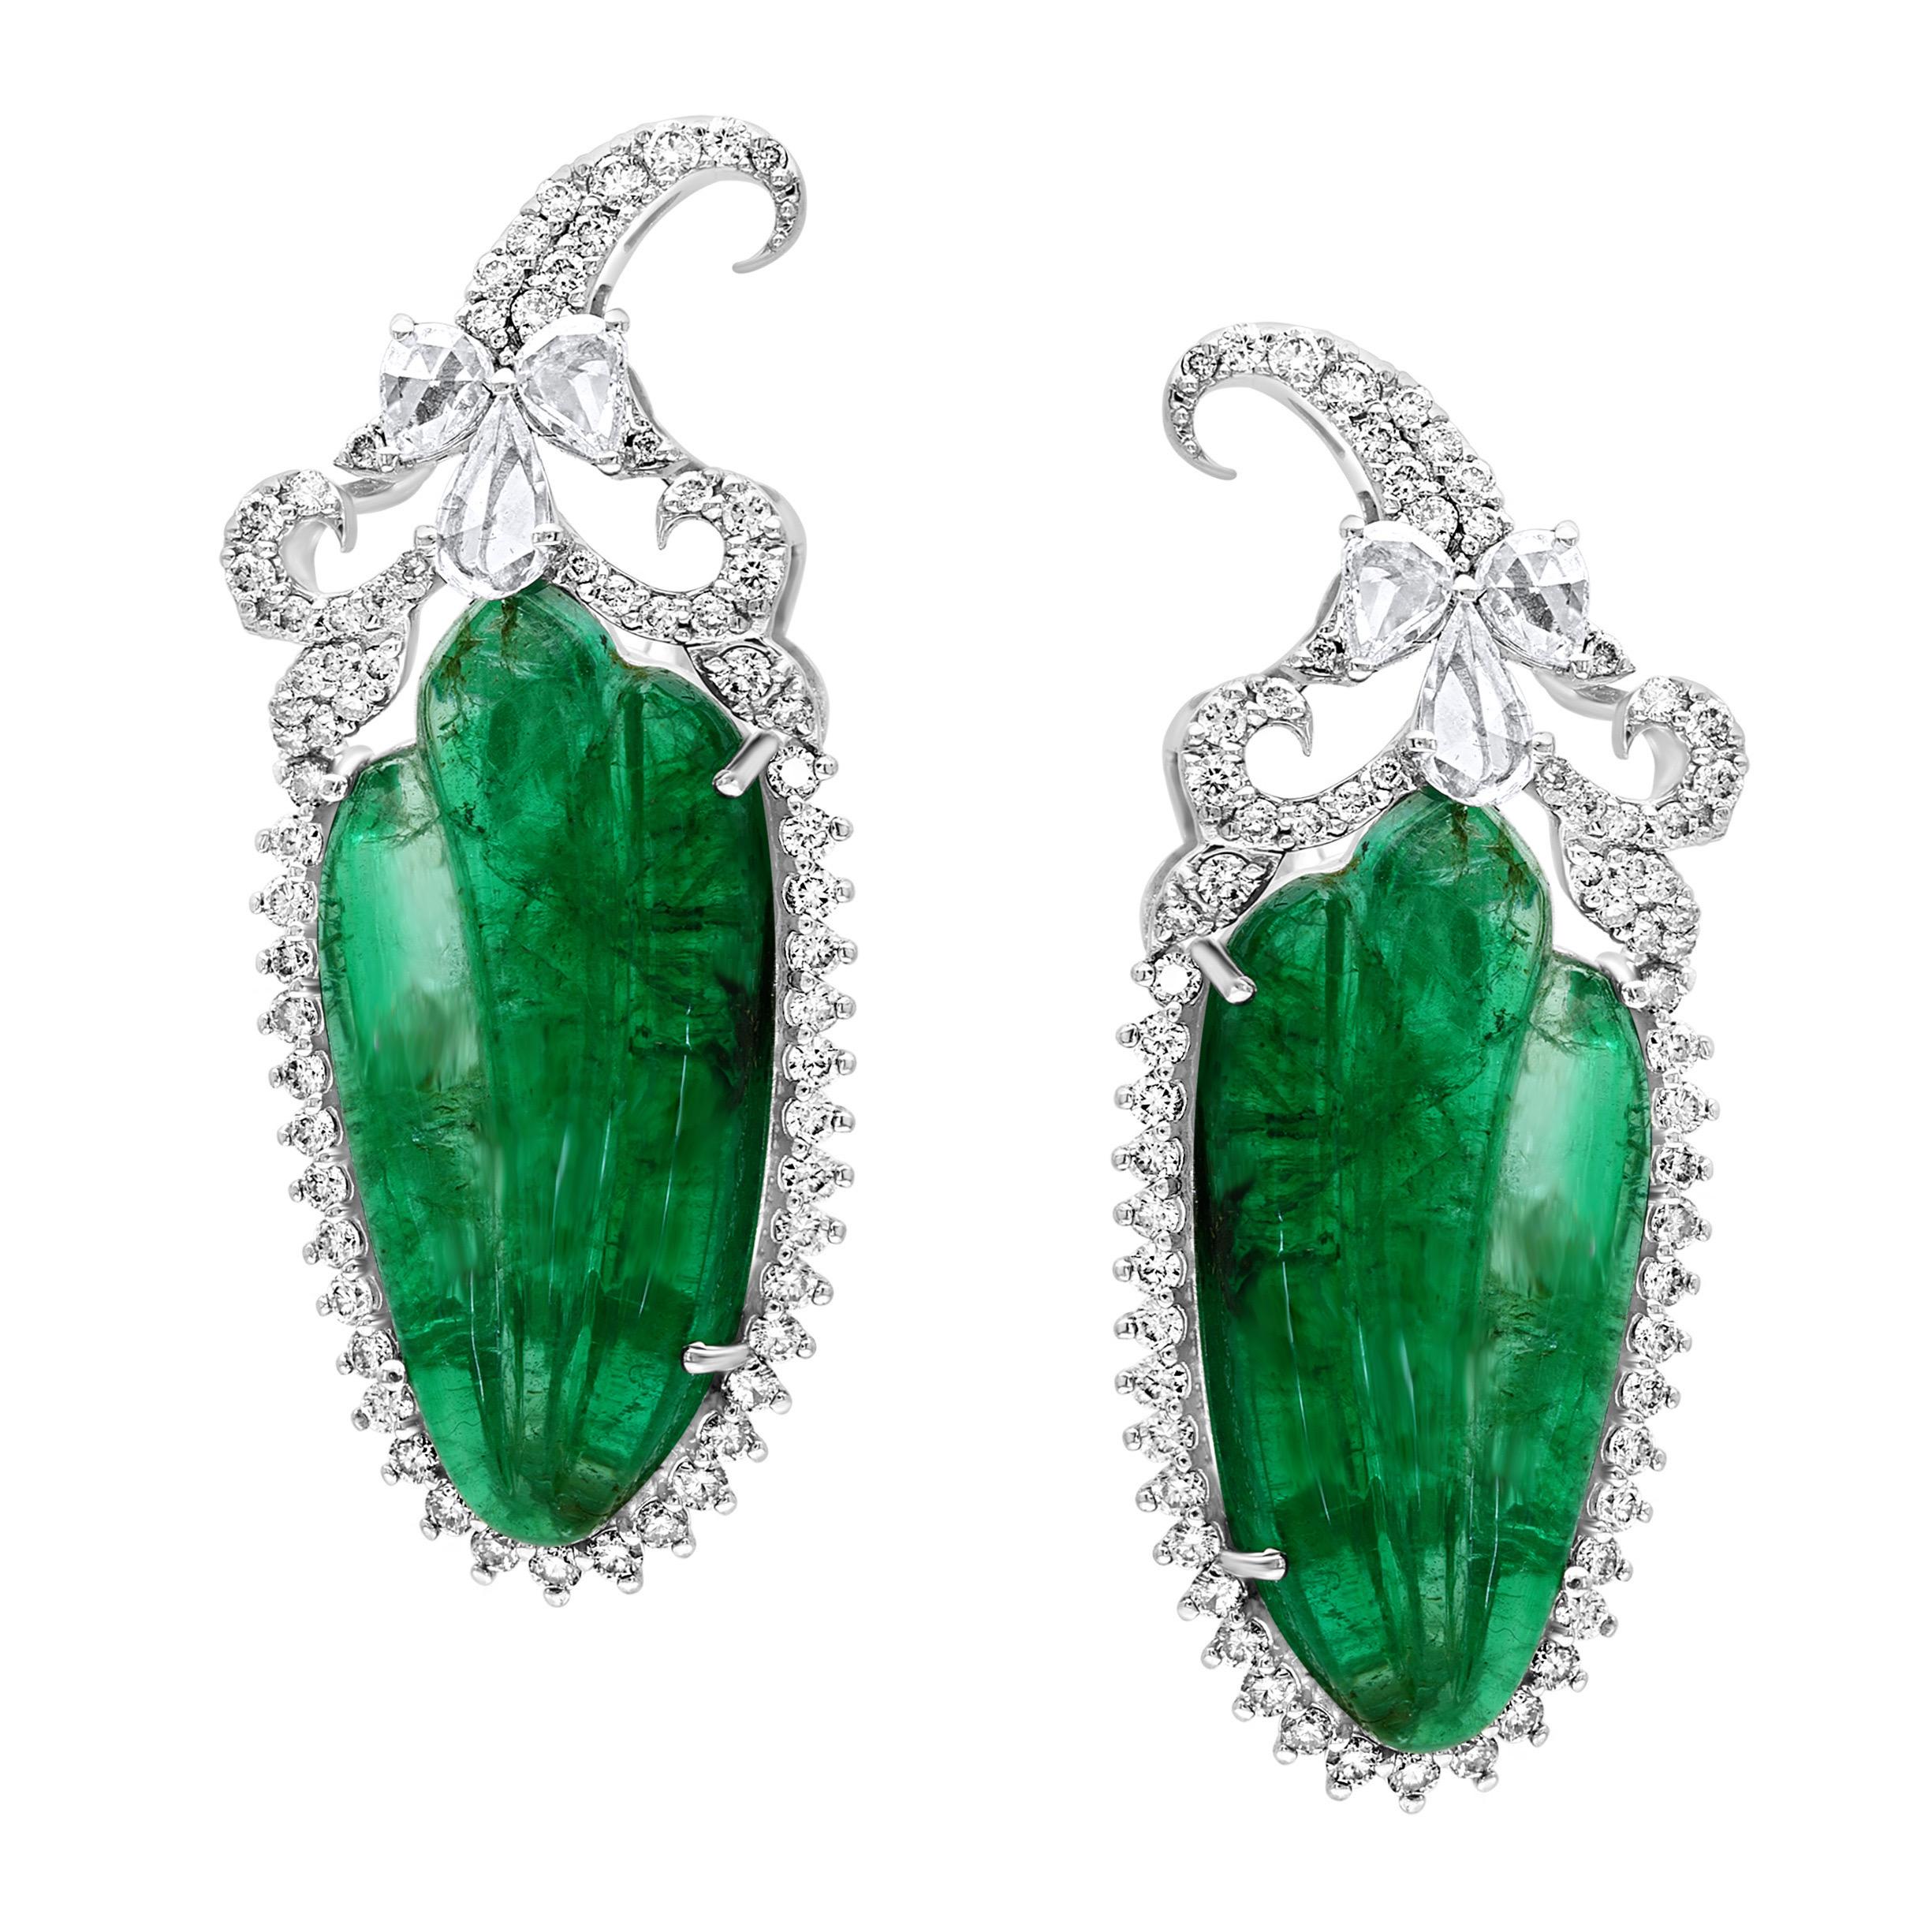 22 Ct Carved Emerald & 2 Ct Diamond Earrings 18 Karat White Gold Post Earrings